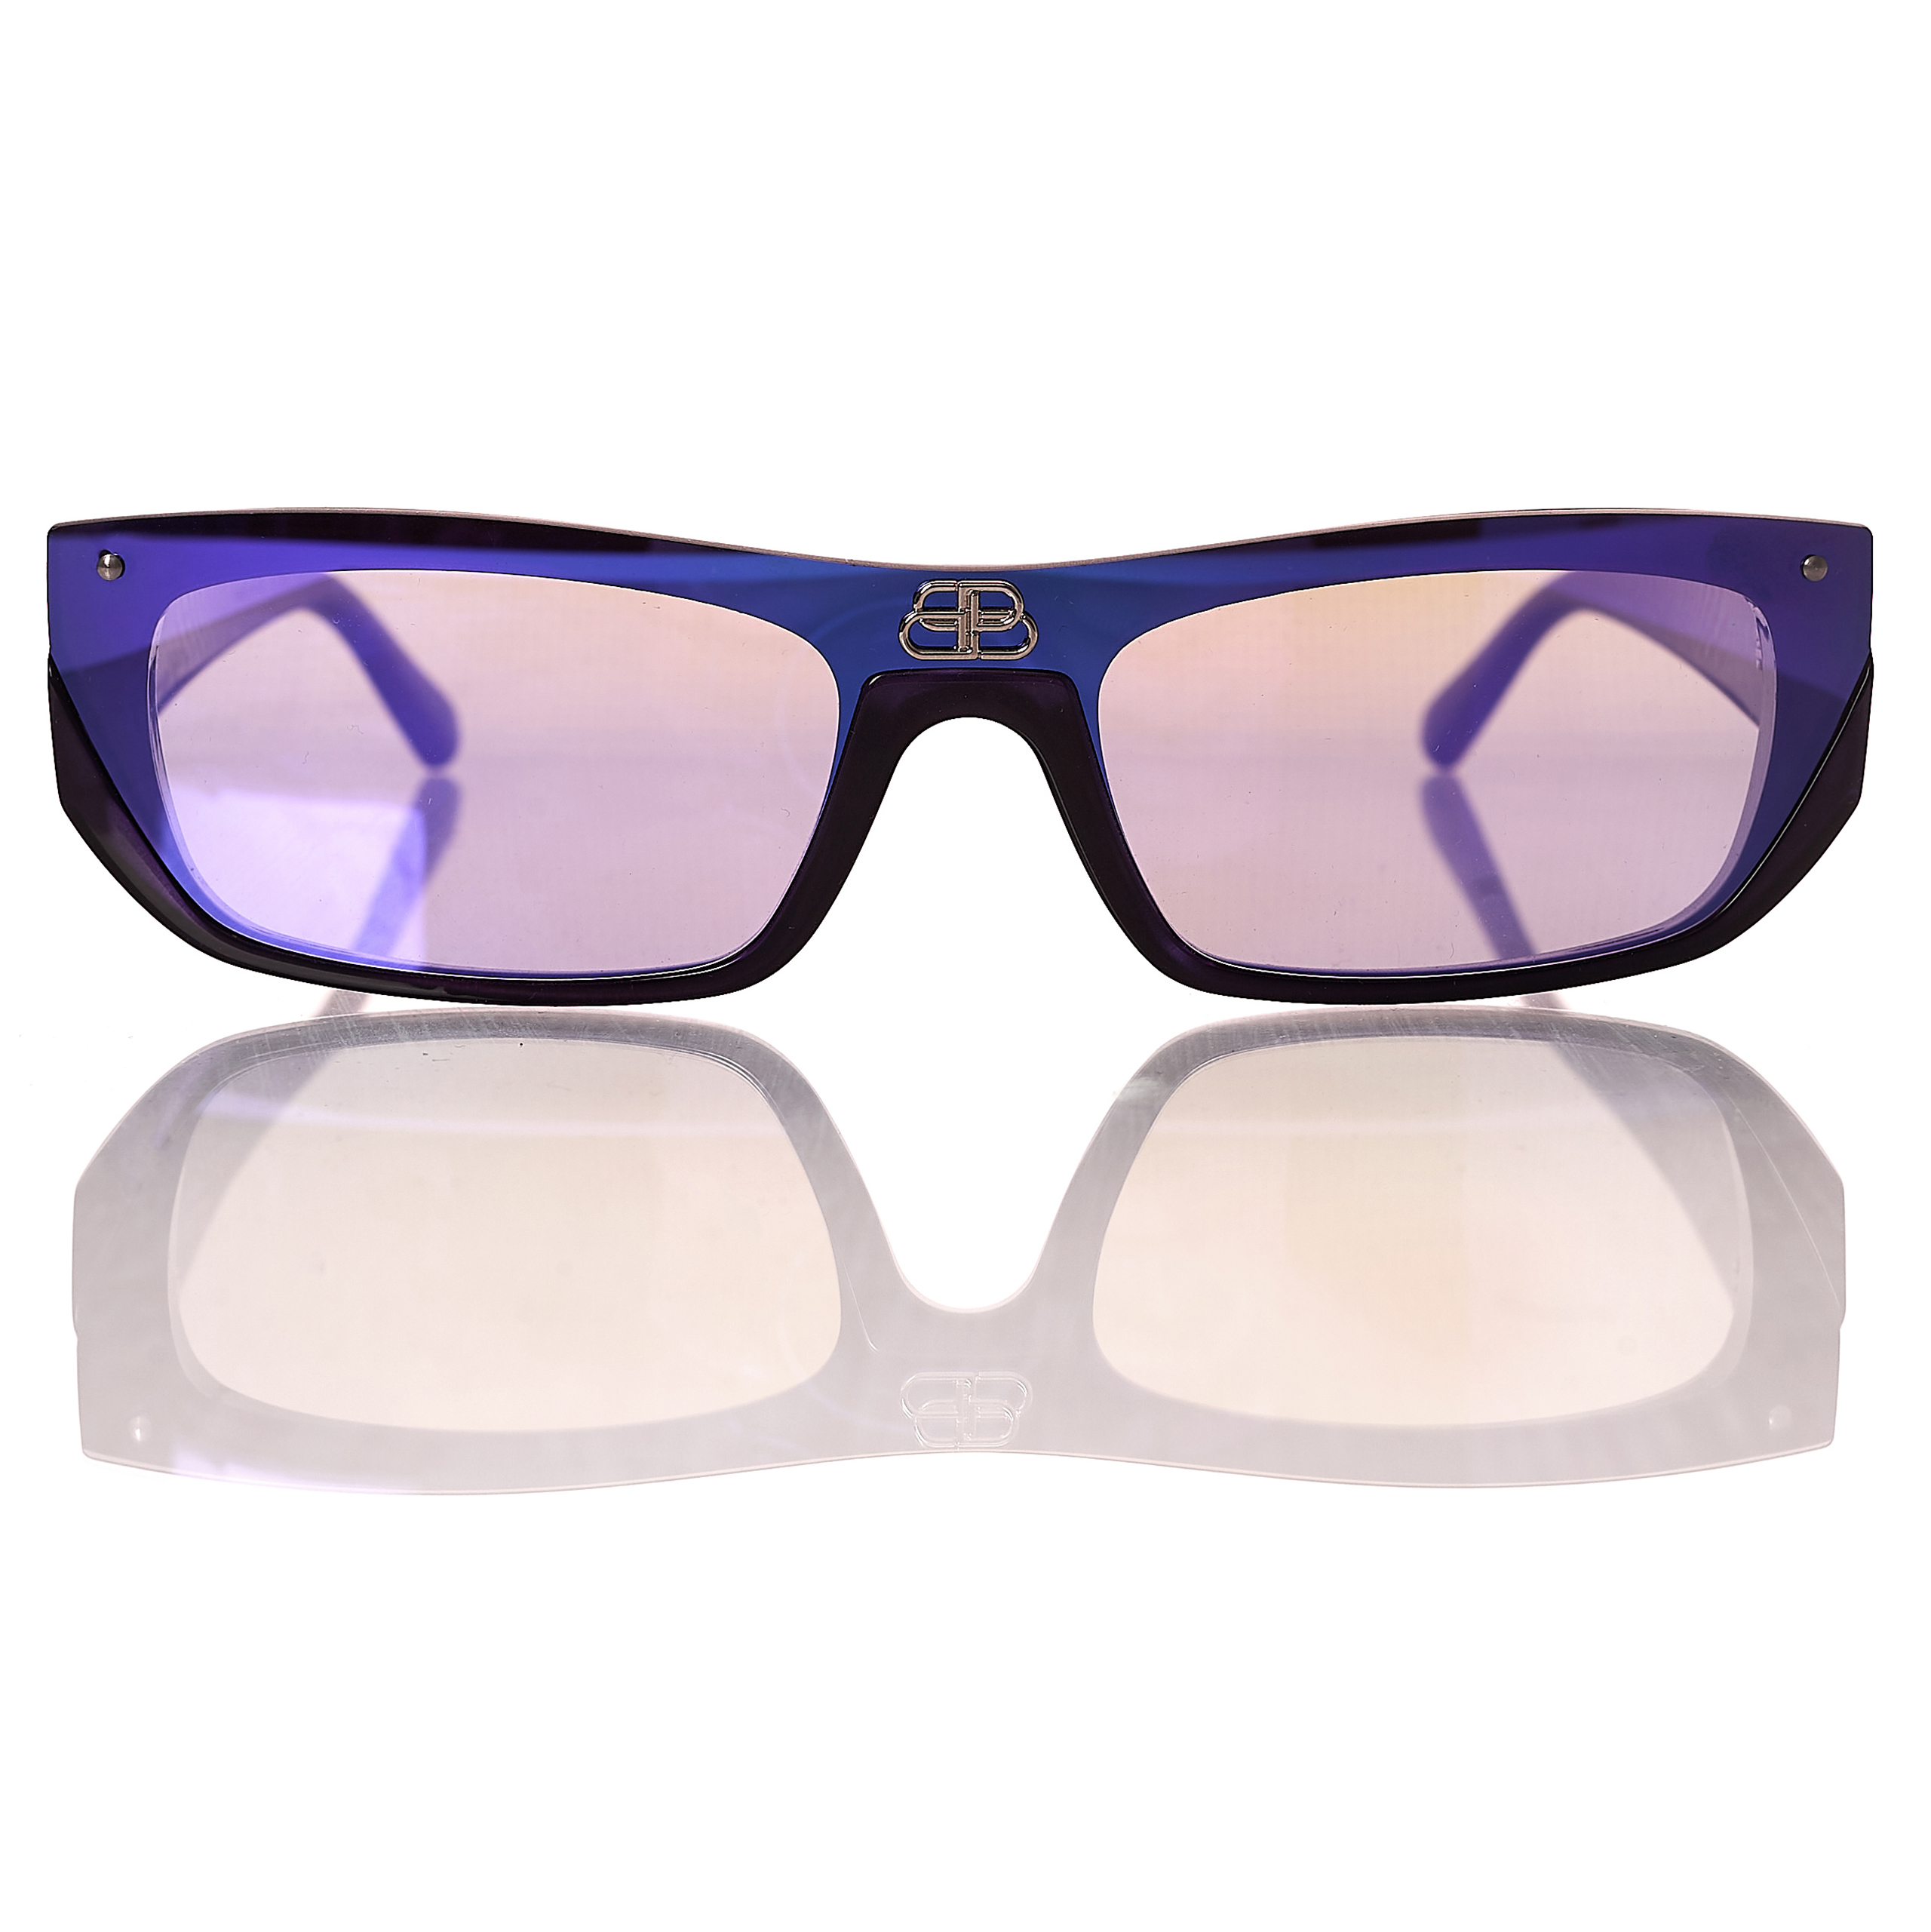 Фиолетовые очки с логотипом Balenciaga 609370/T0003/5067, размер One Size 609370/T0003/5067 - фото 2